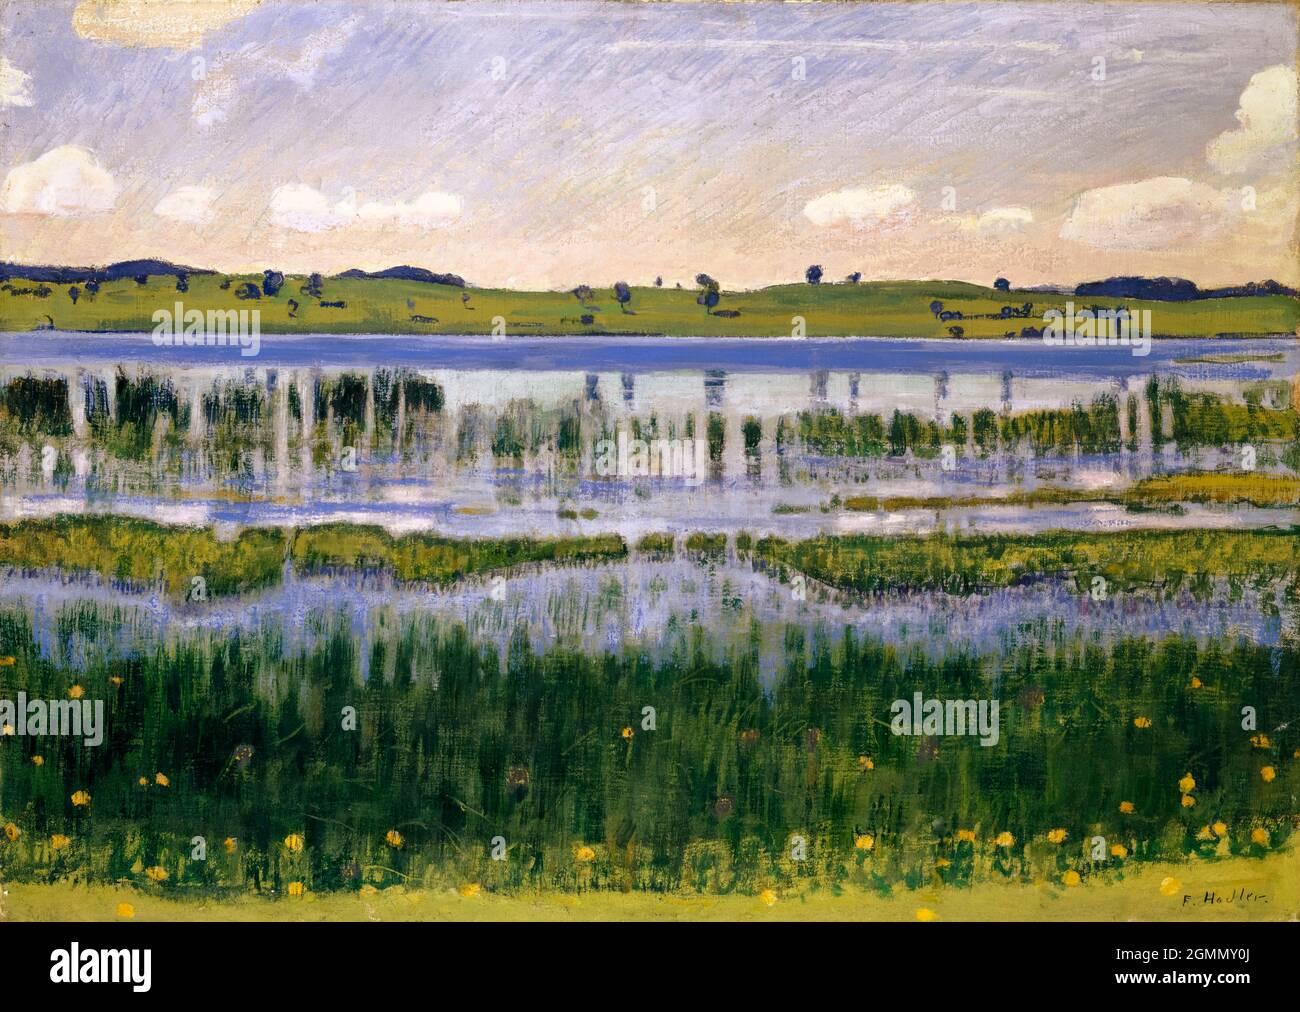 Ferdinand Hodler, Lake Burgäschisee, landscape painting, circa 1901 Stock Photo